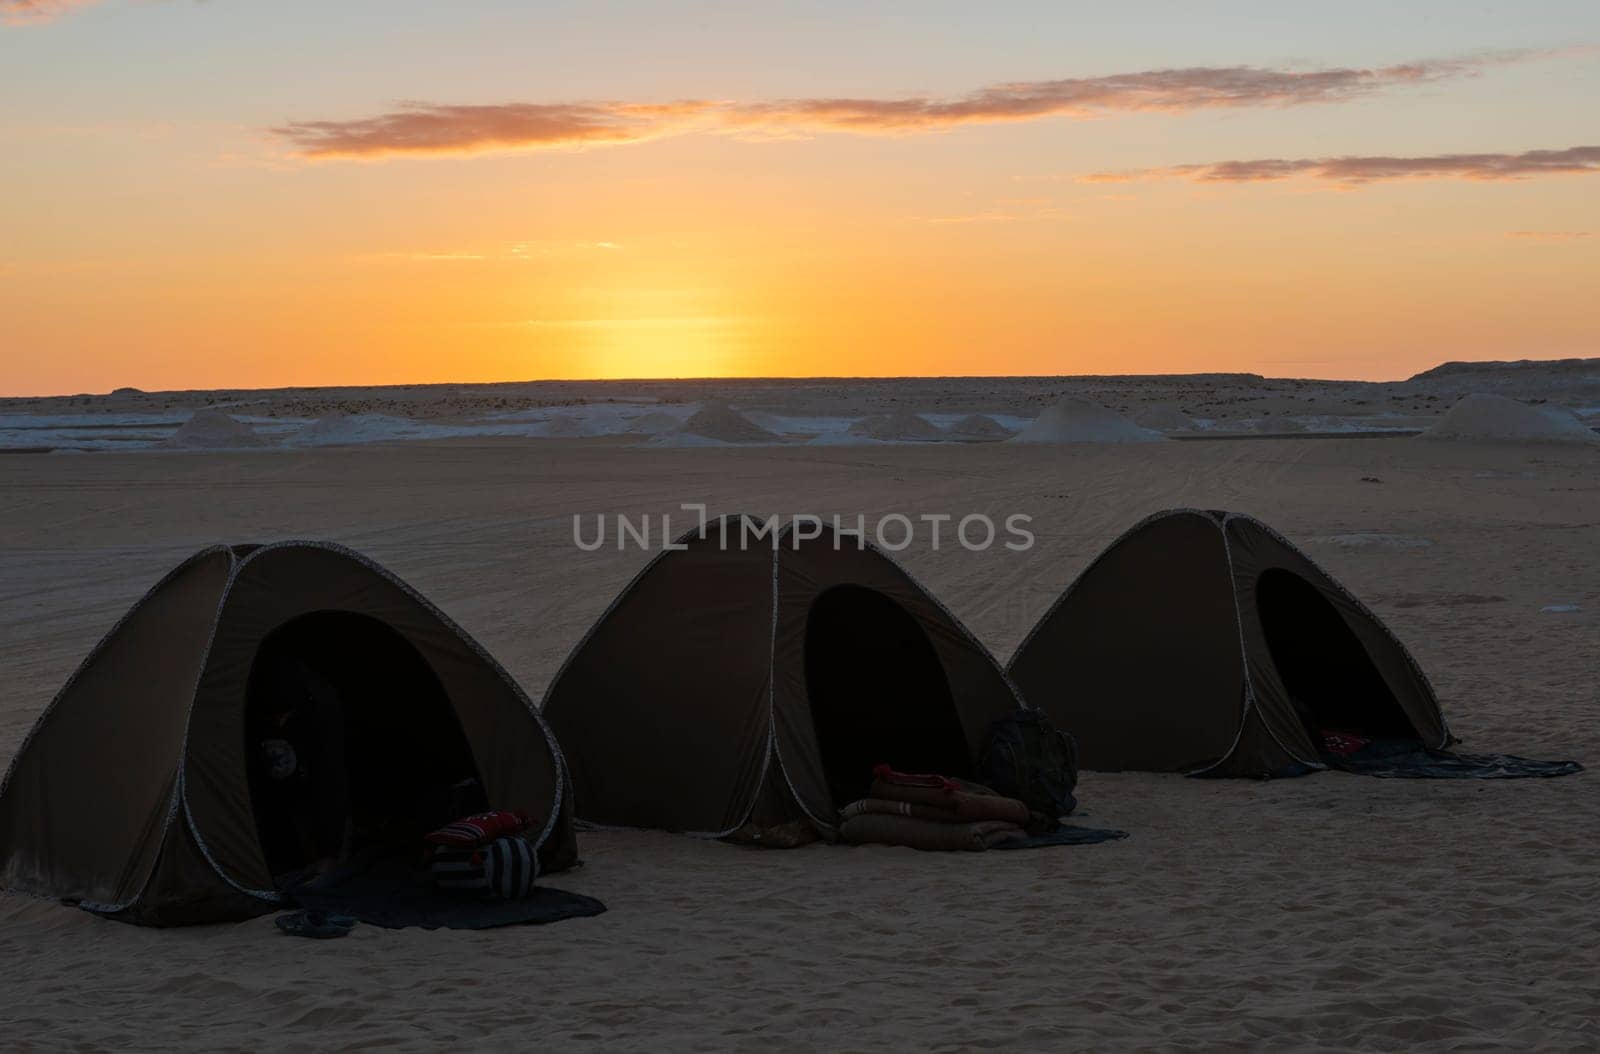 Barren desert landscape campsite in hot climate with tents by paulvinten